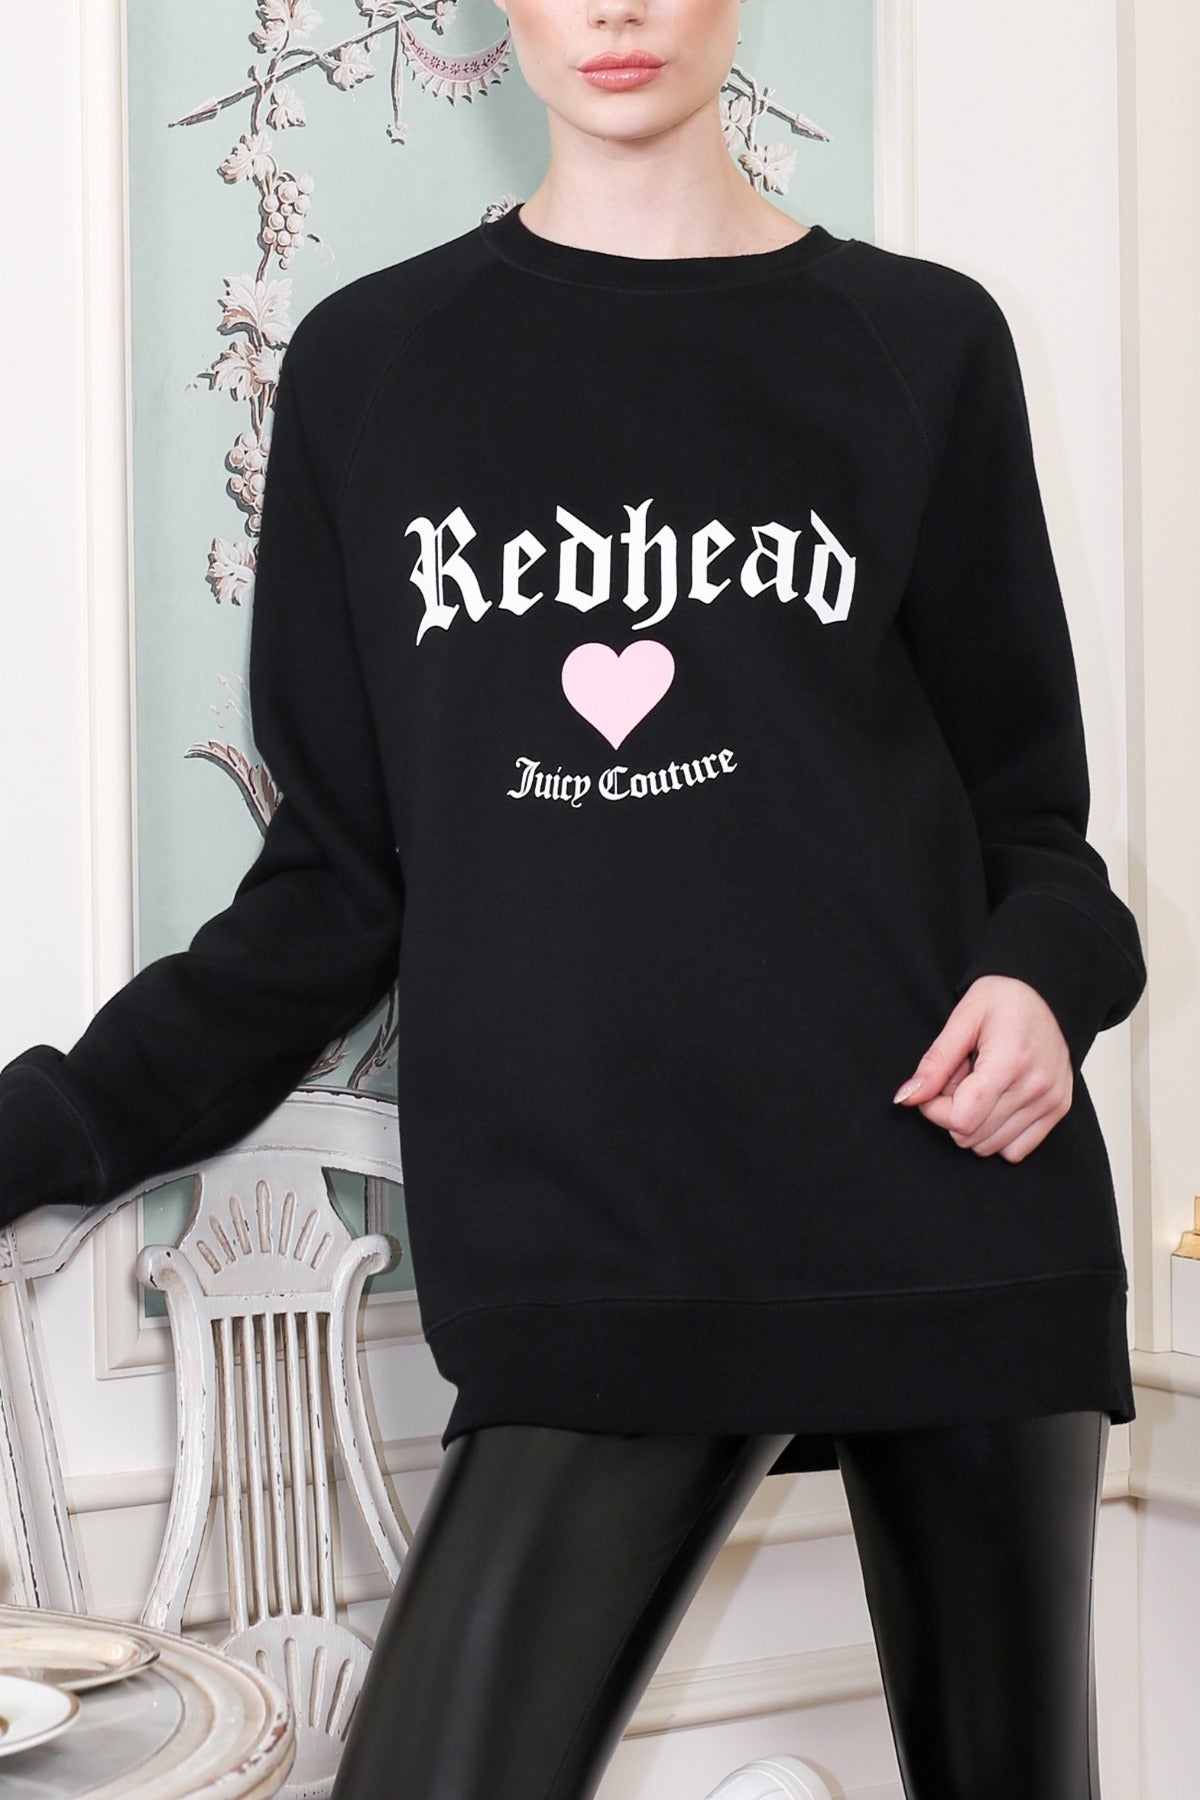 The "REDHEAD" Classic Crew Neck Sweatshirt